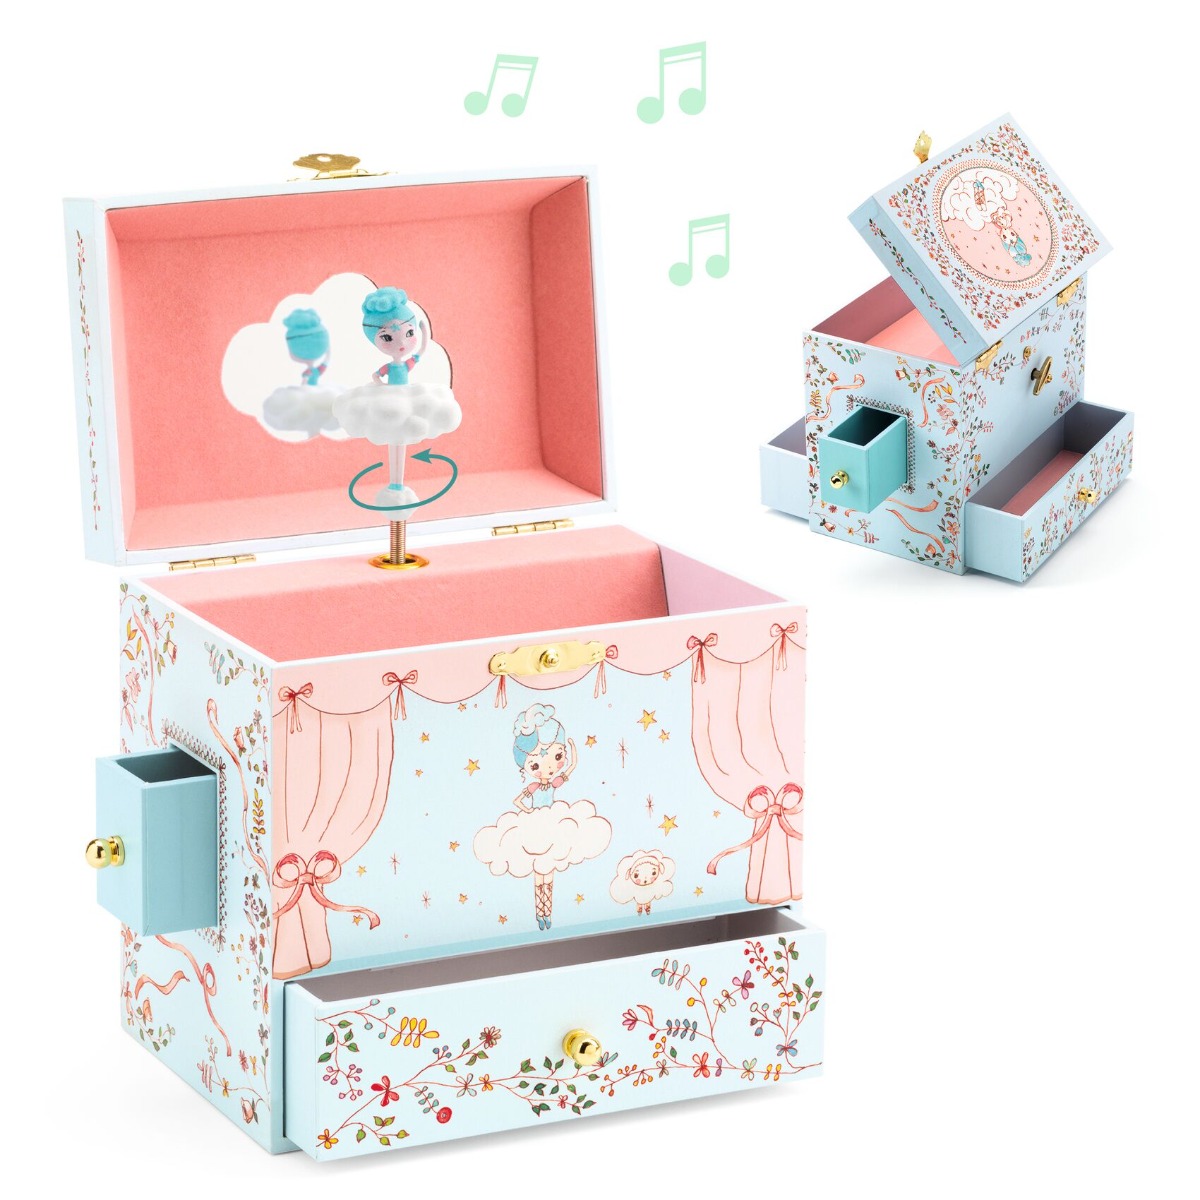 Ballerina music box